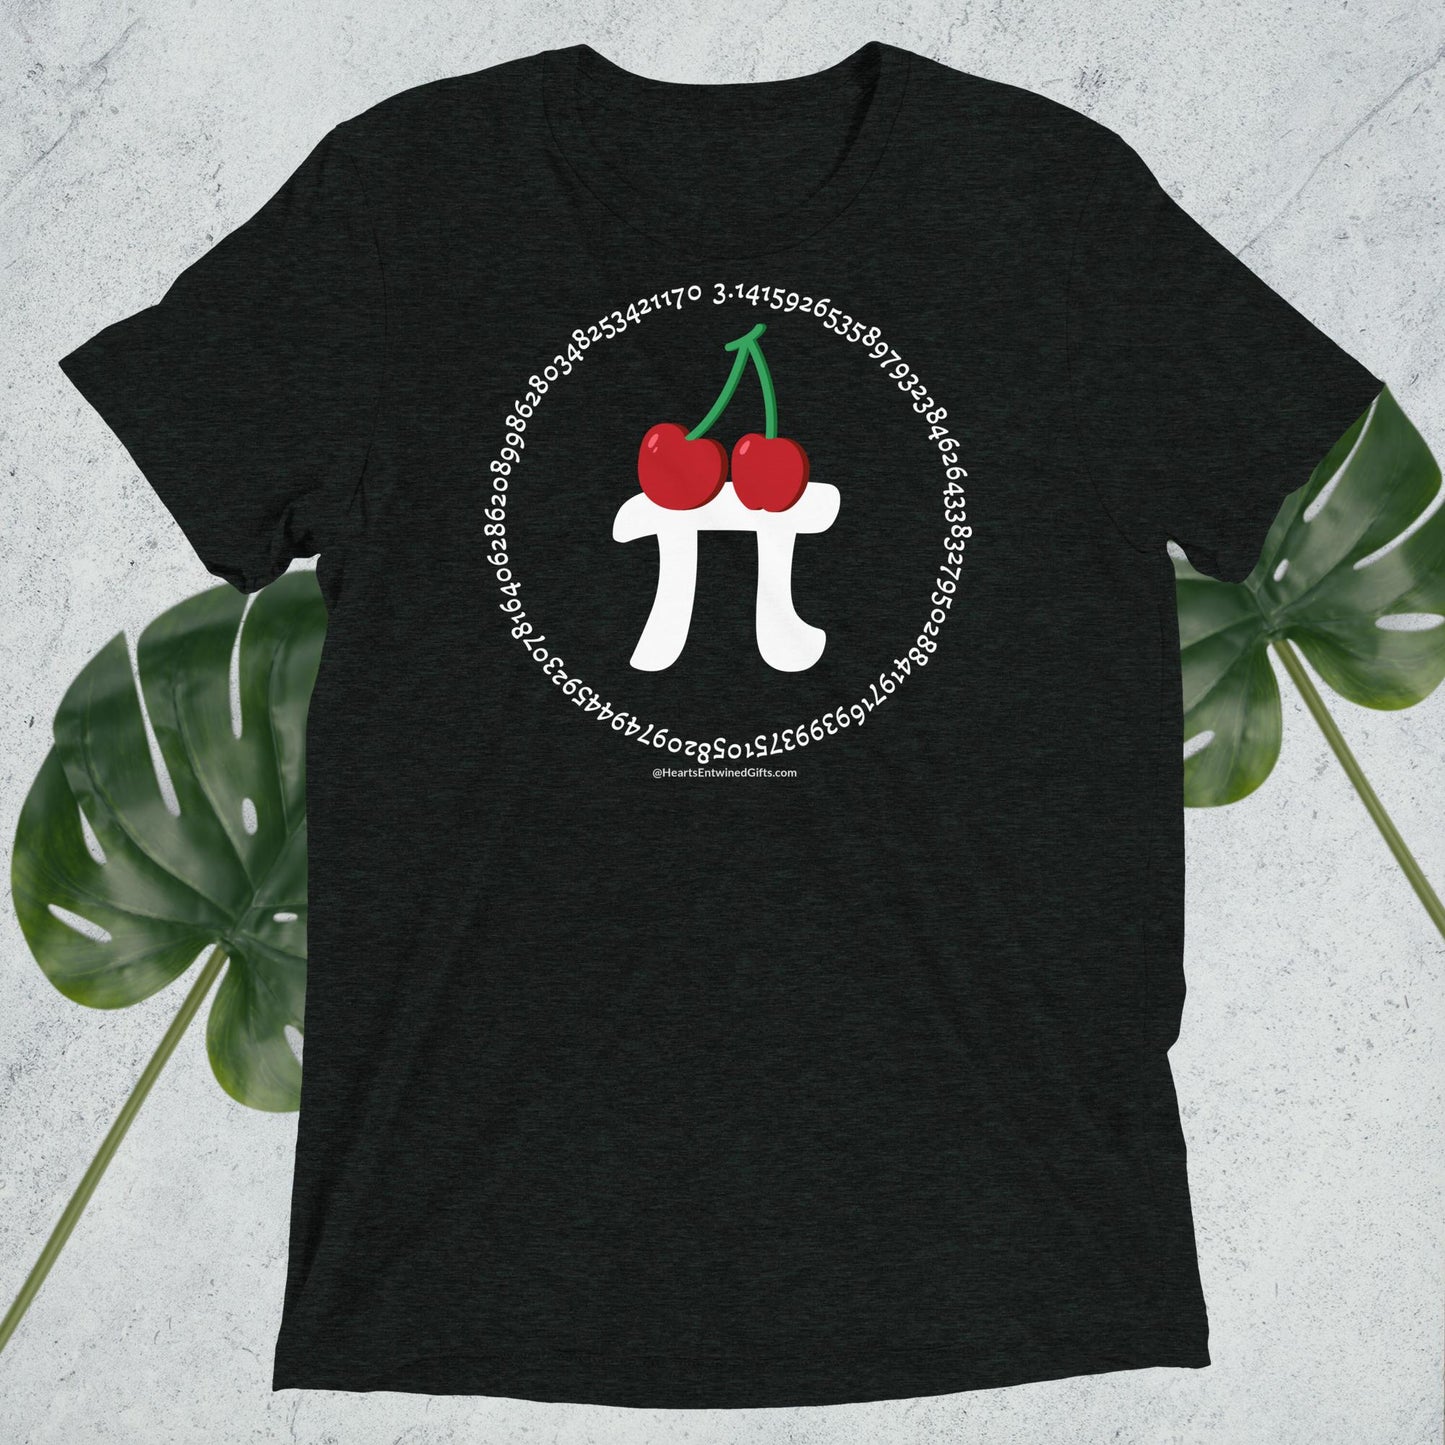 Cherry Pi (π) | Unisex Tri-blend T-shirt